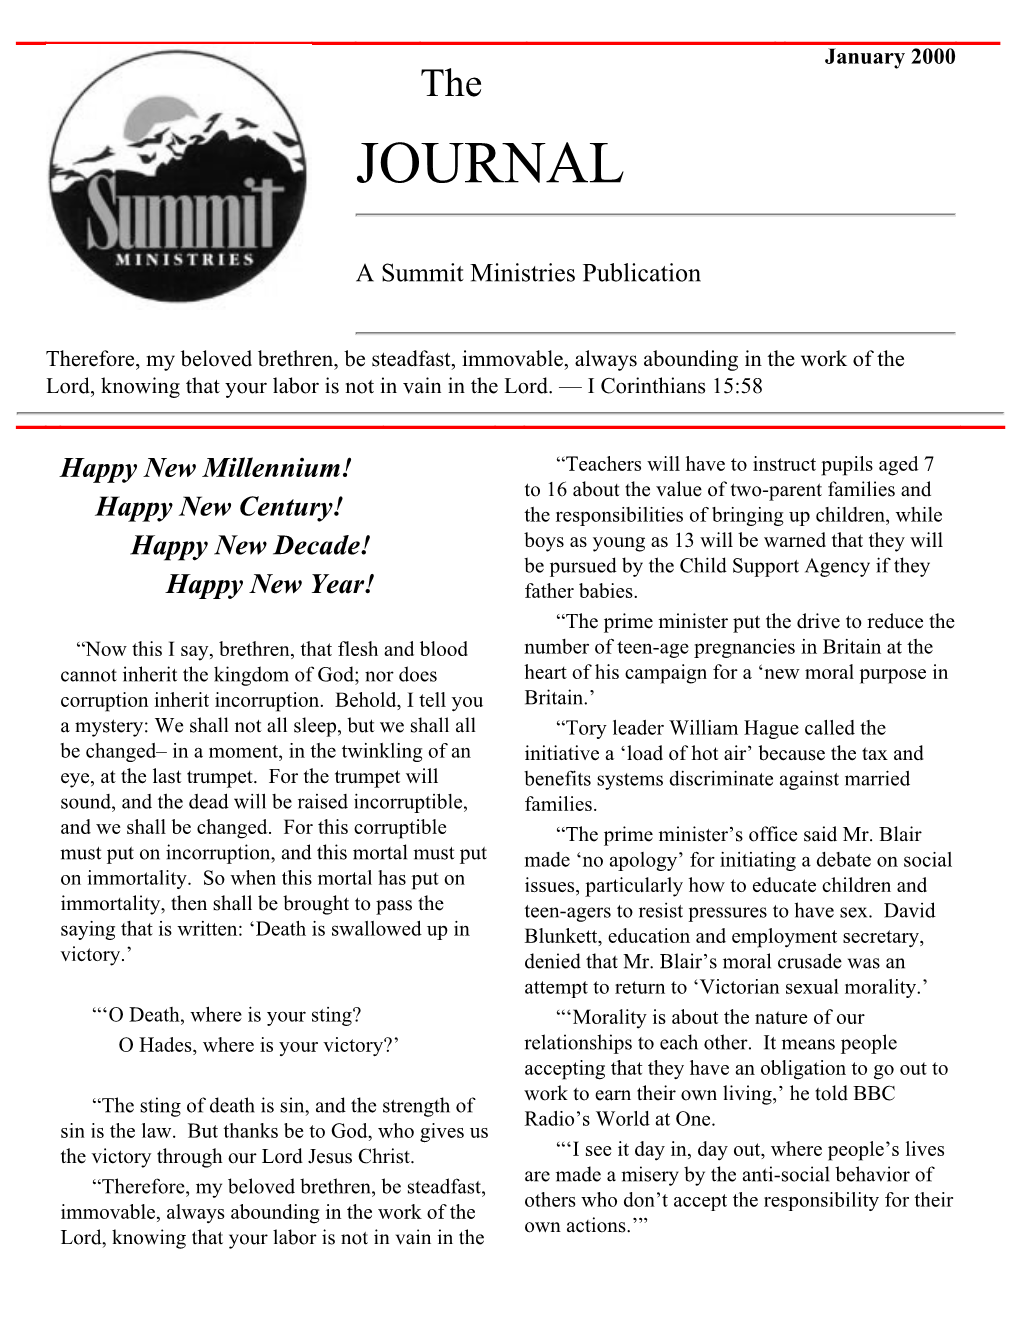 January 2000 Journal